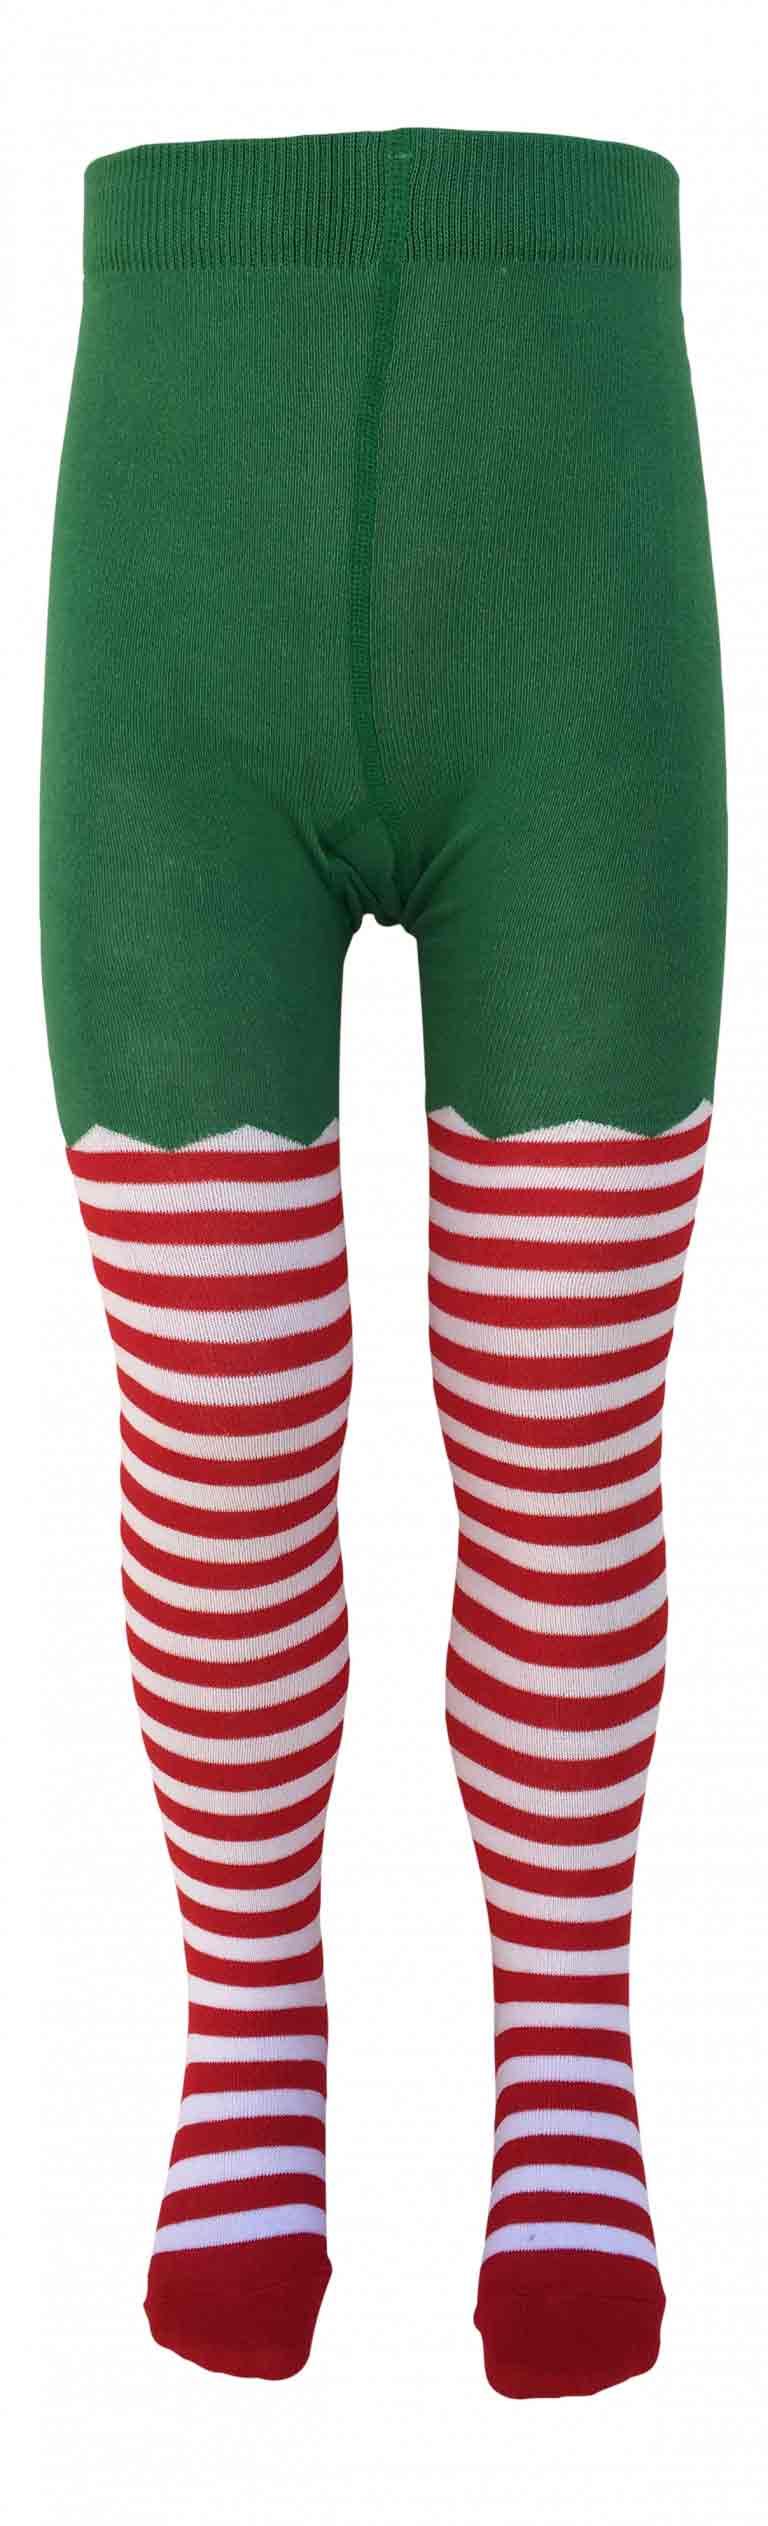 Childrens tights - Elf